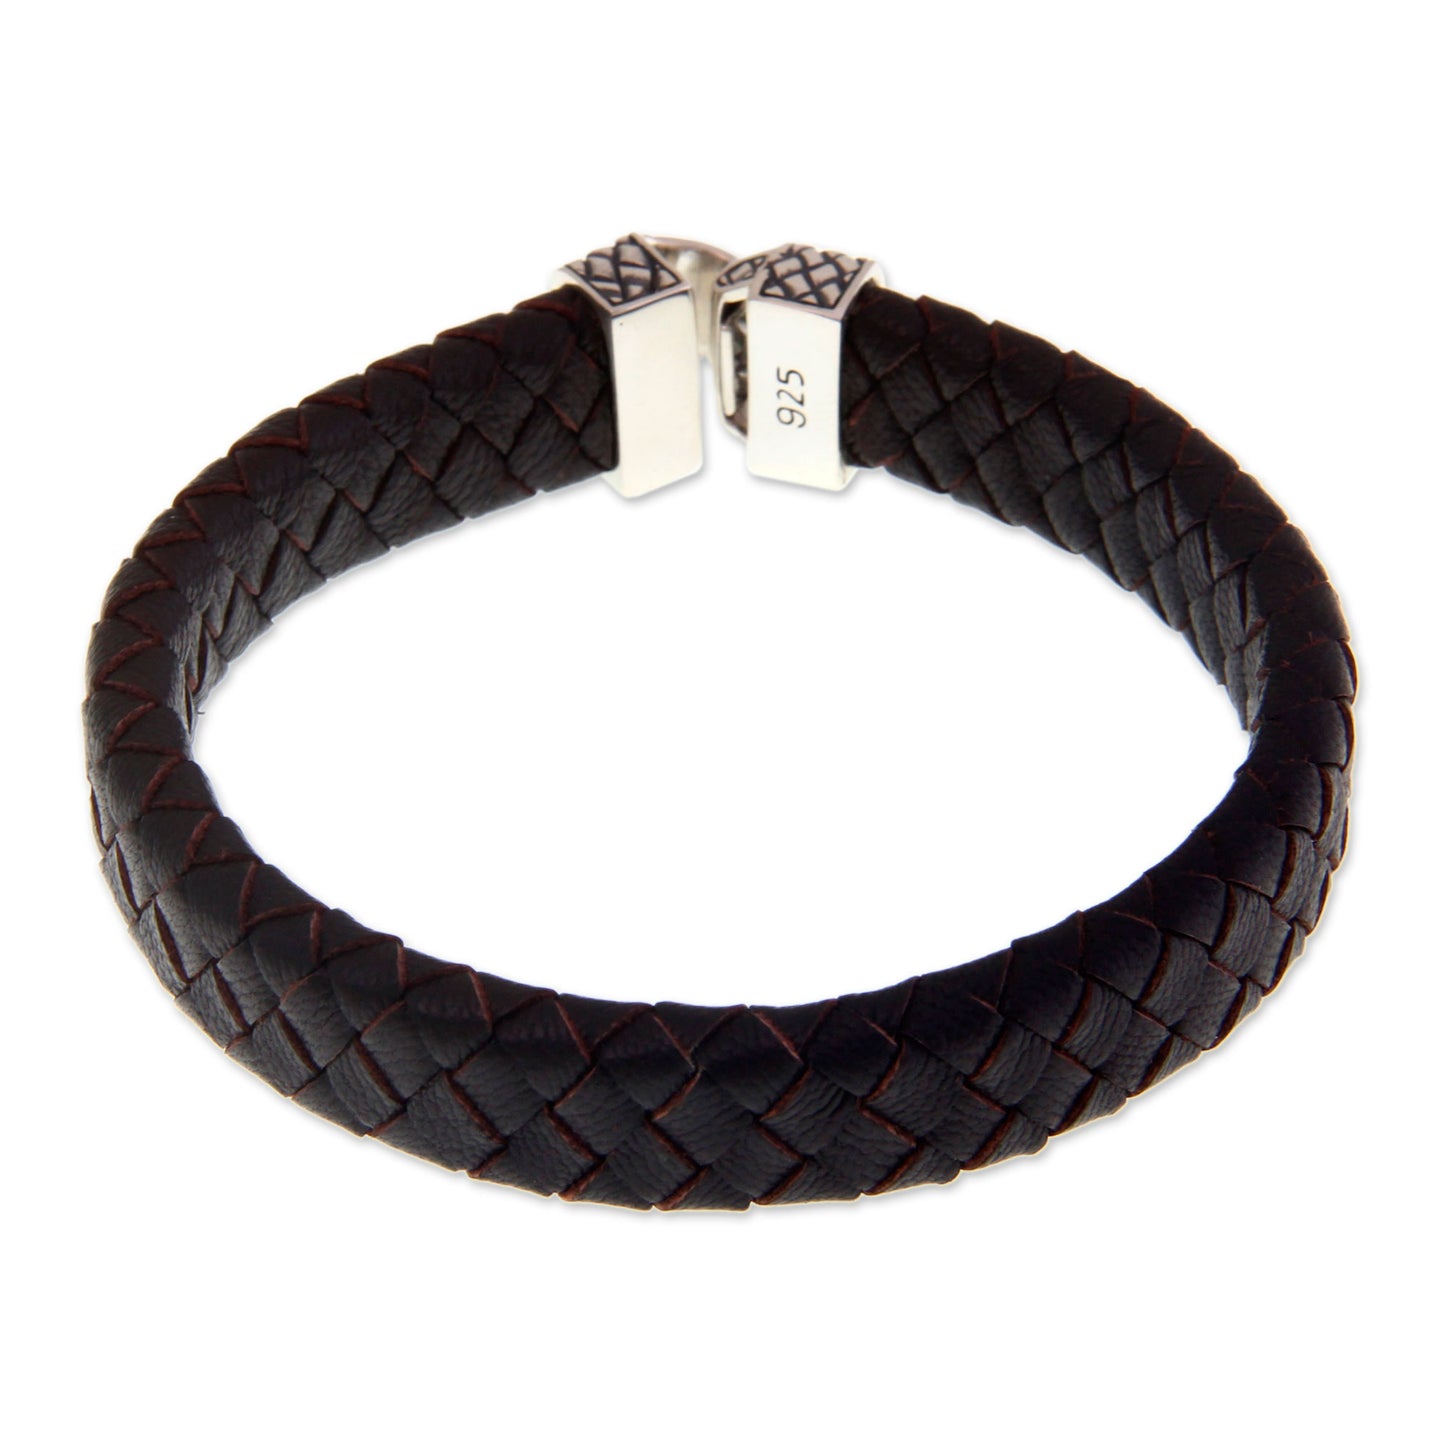 Virile Leather Men's Bracelet